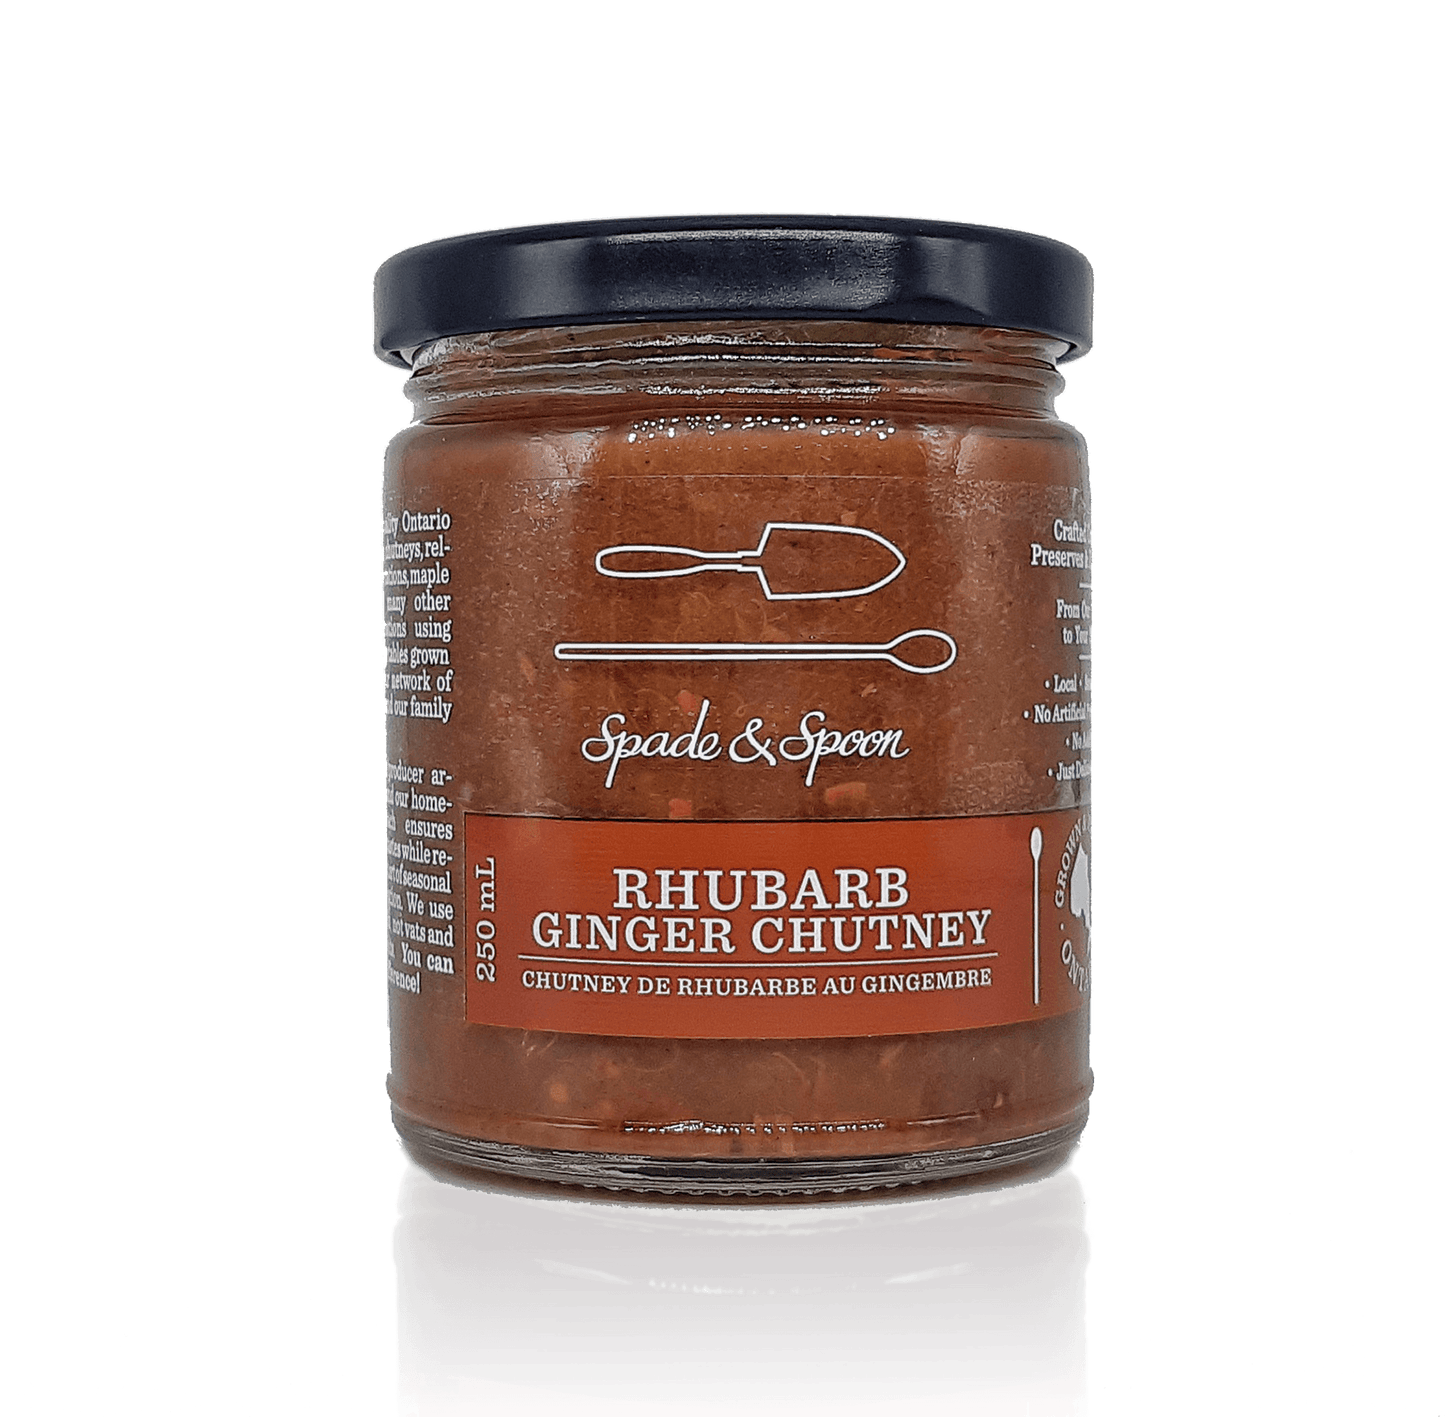 Rhubarb Ginger Chutney - Spade & Spoon - Ontario Farm Goods